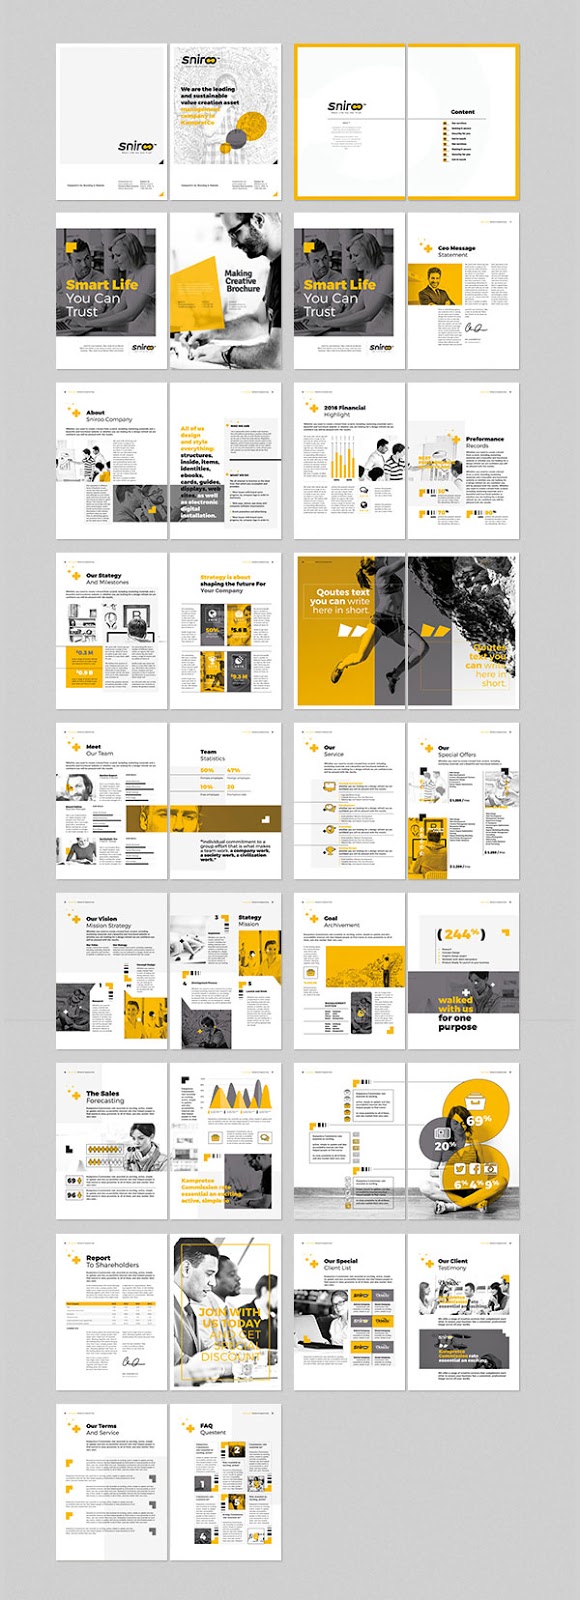 Inspirasi 20+ Desain Brosur dan Katalog Modern - 2 Color Catalogue Layout Ideas